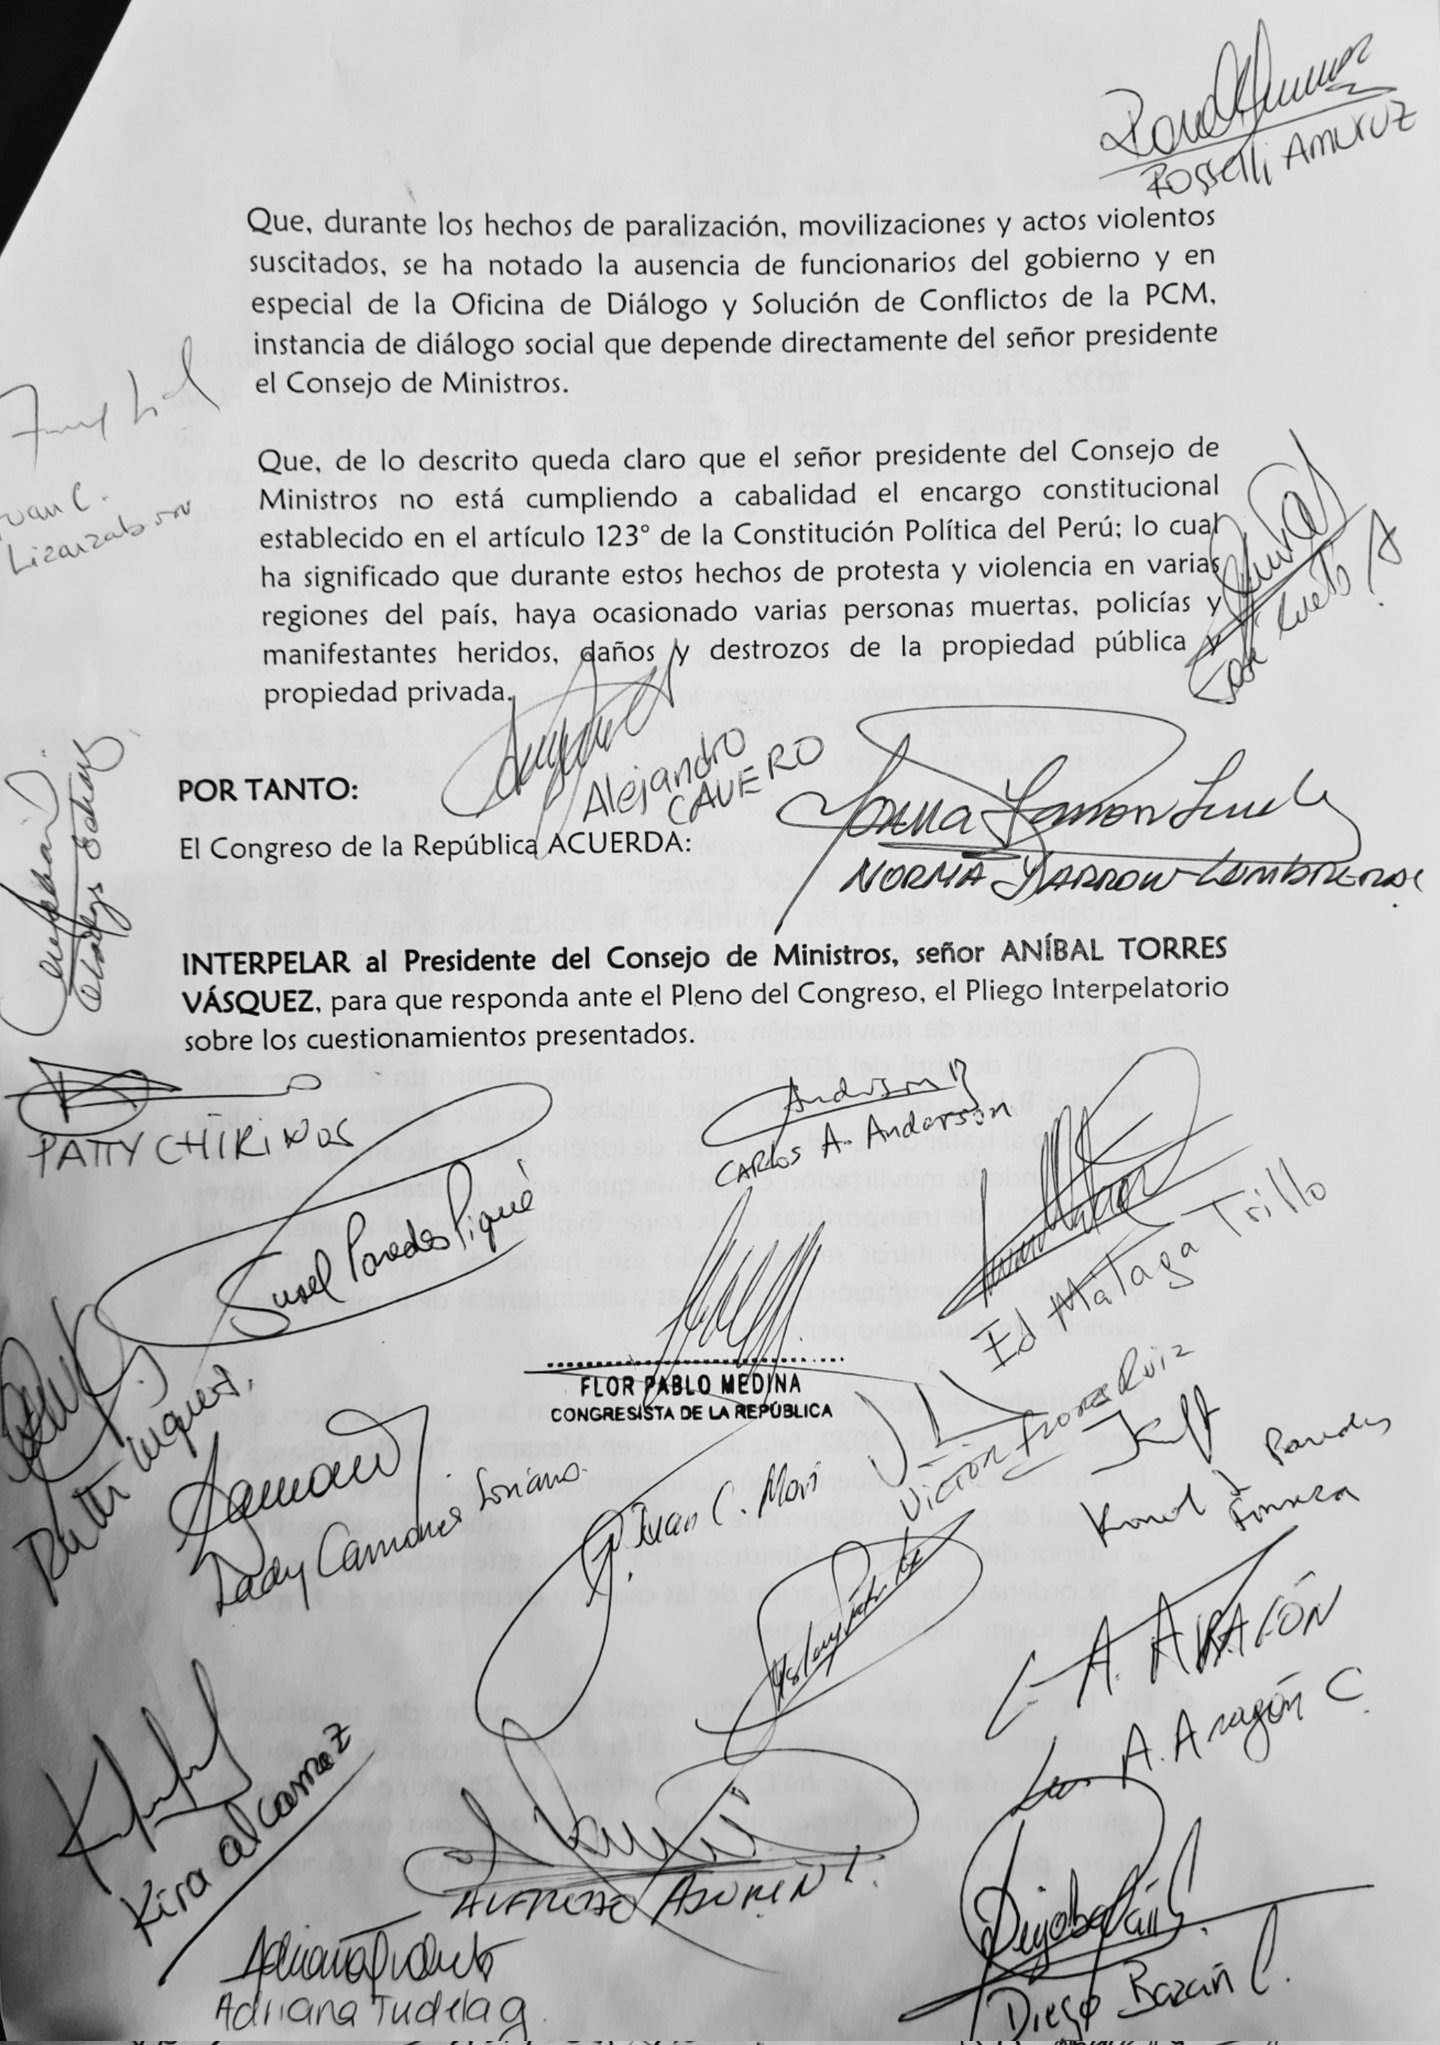 Alcanzan firmas para presentar moción de interpelación contra Aníbal Torres